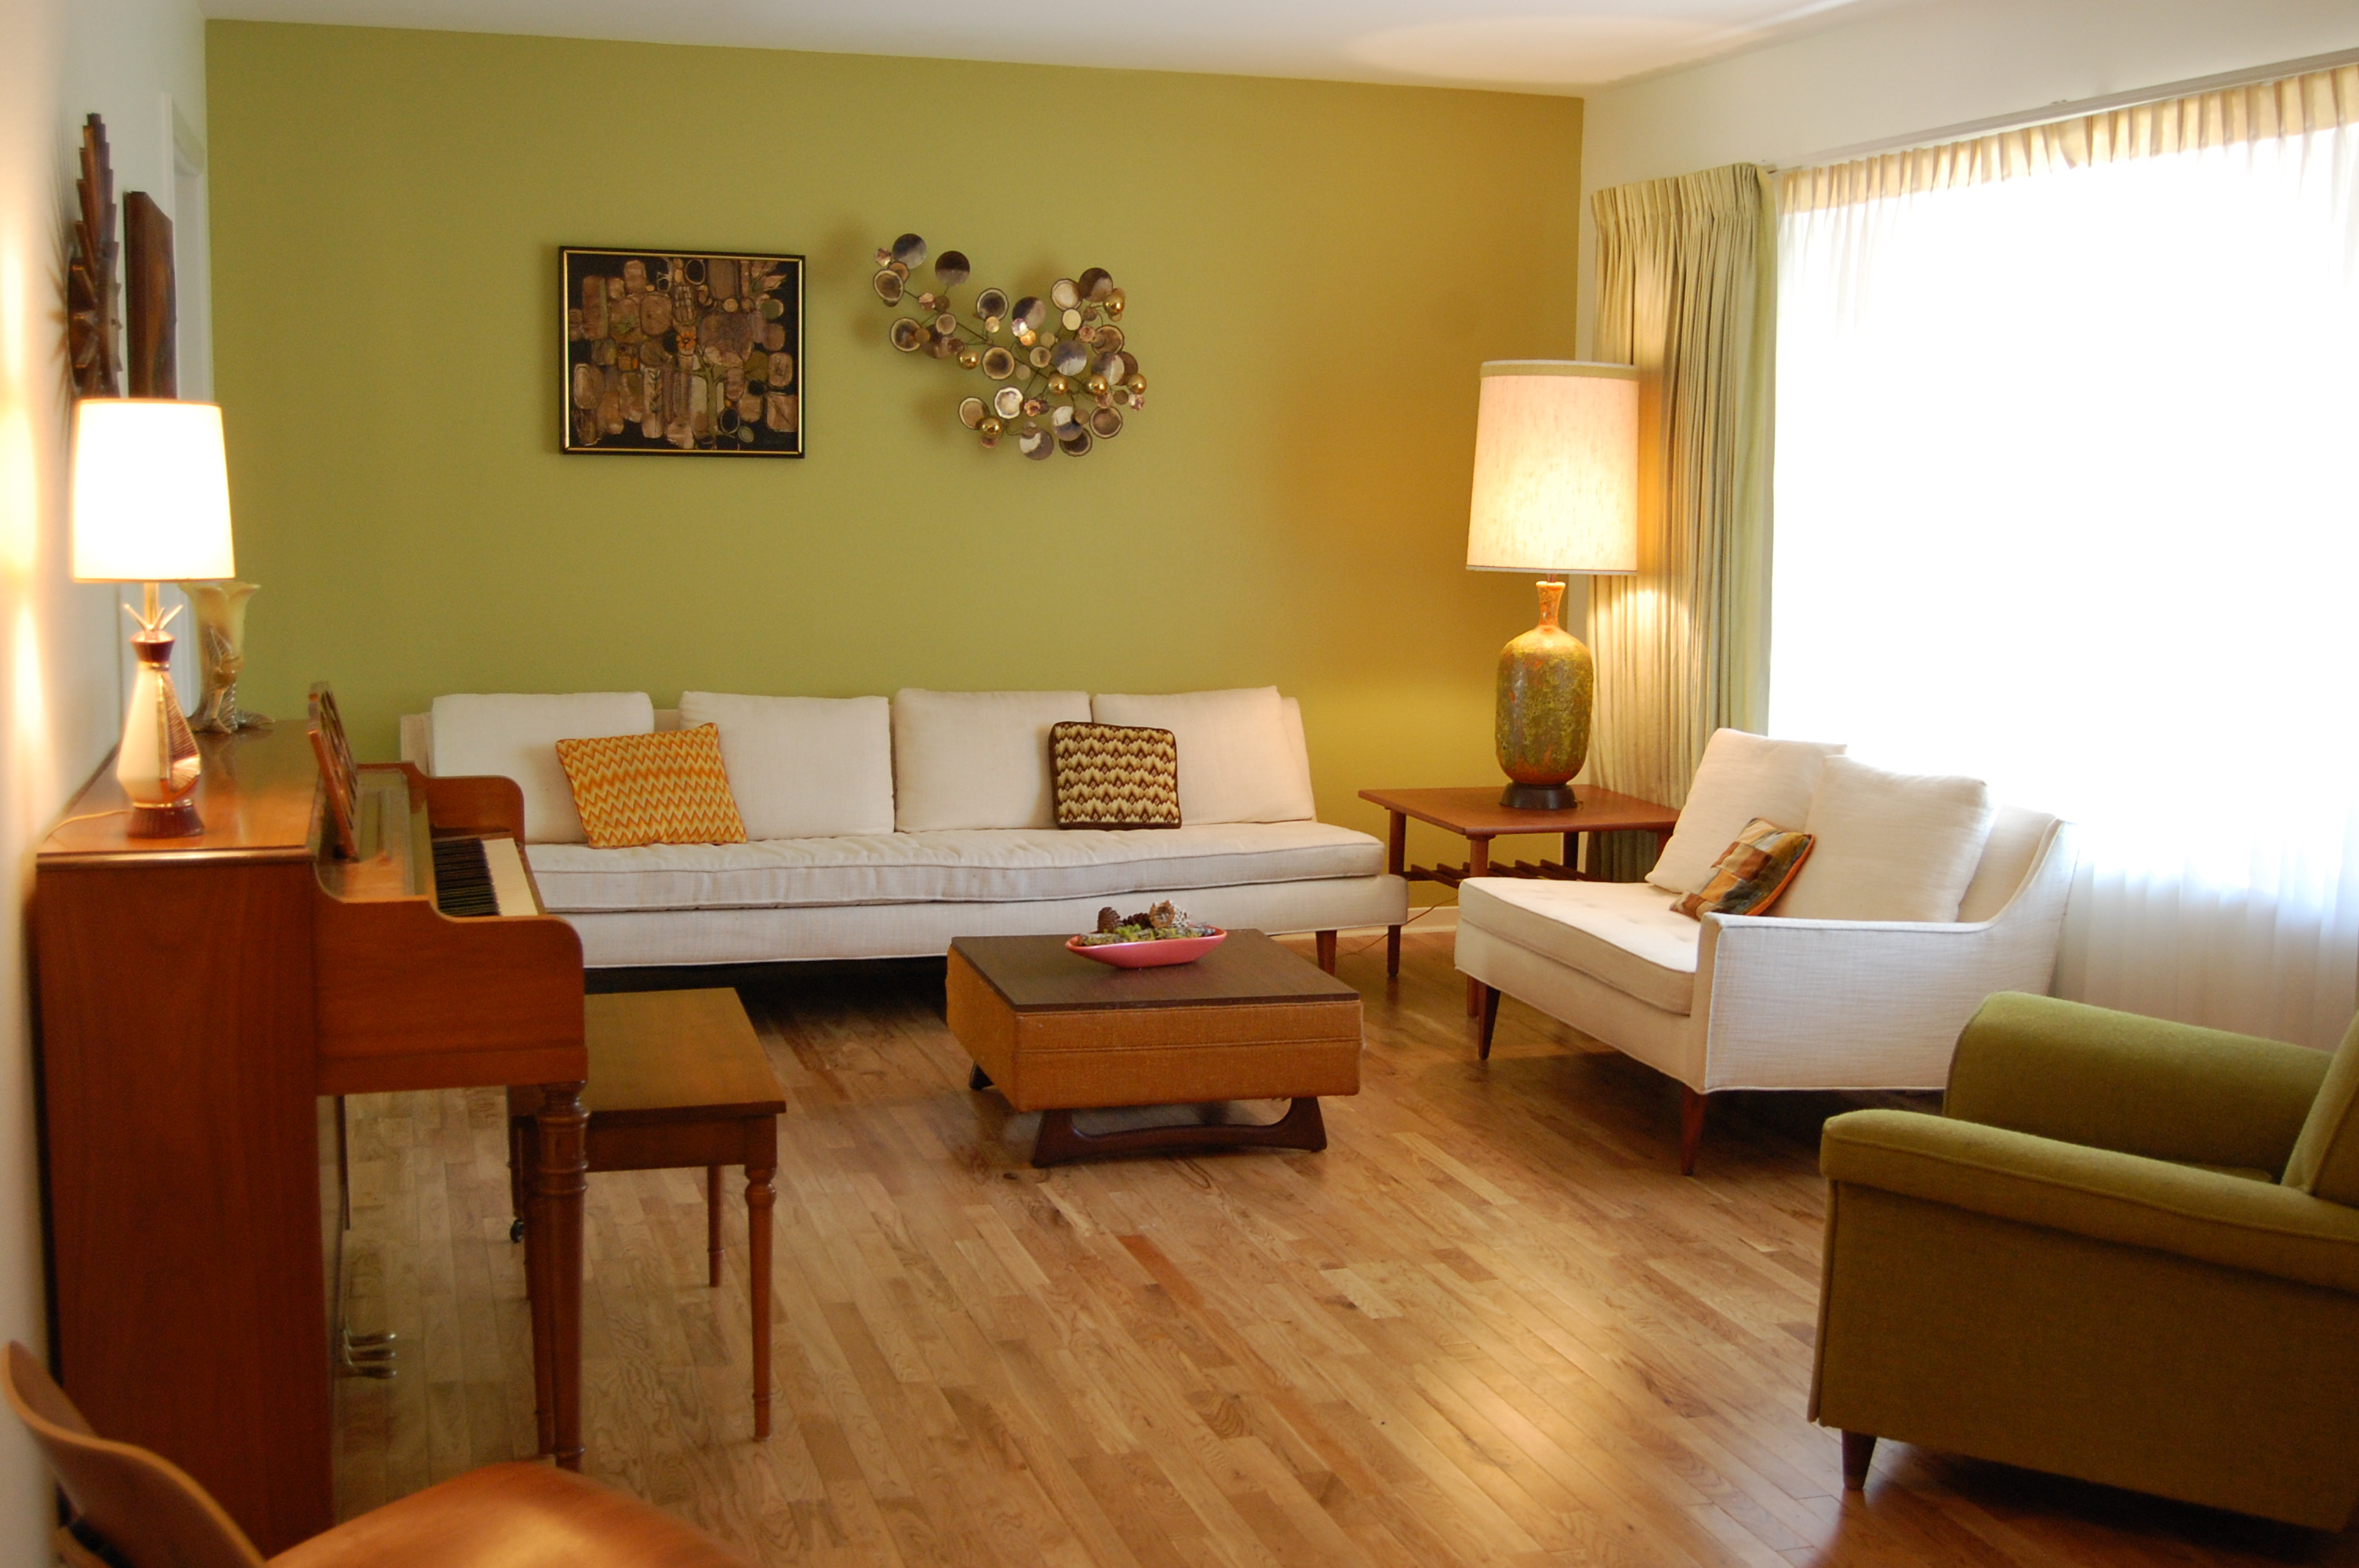 Interior Design Living Room With Avocado Paint